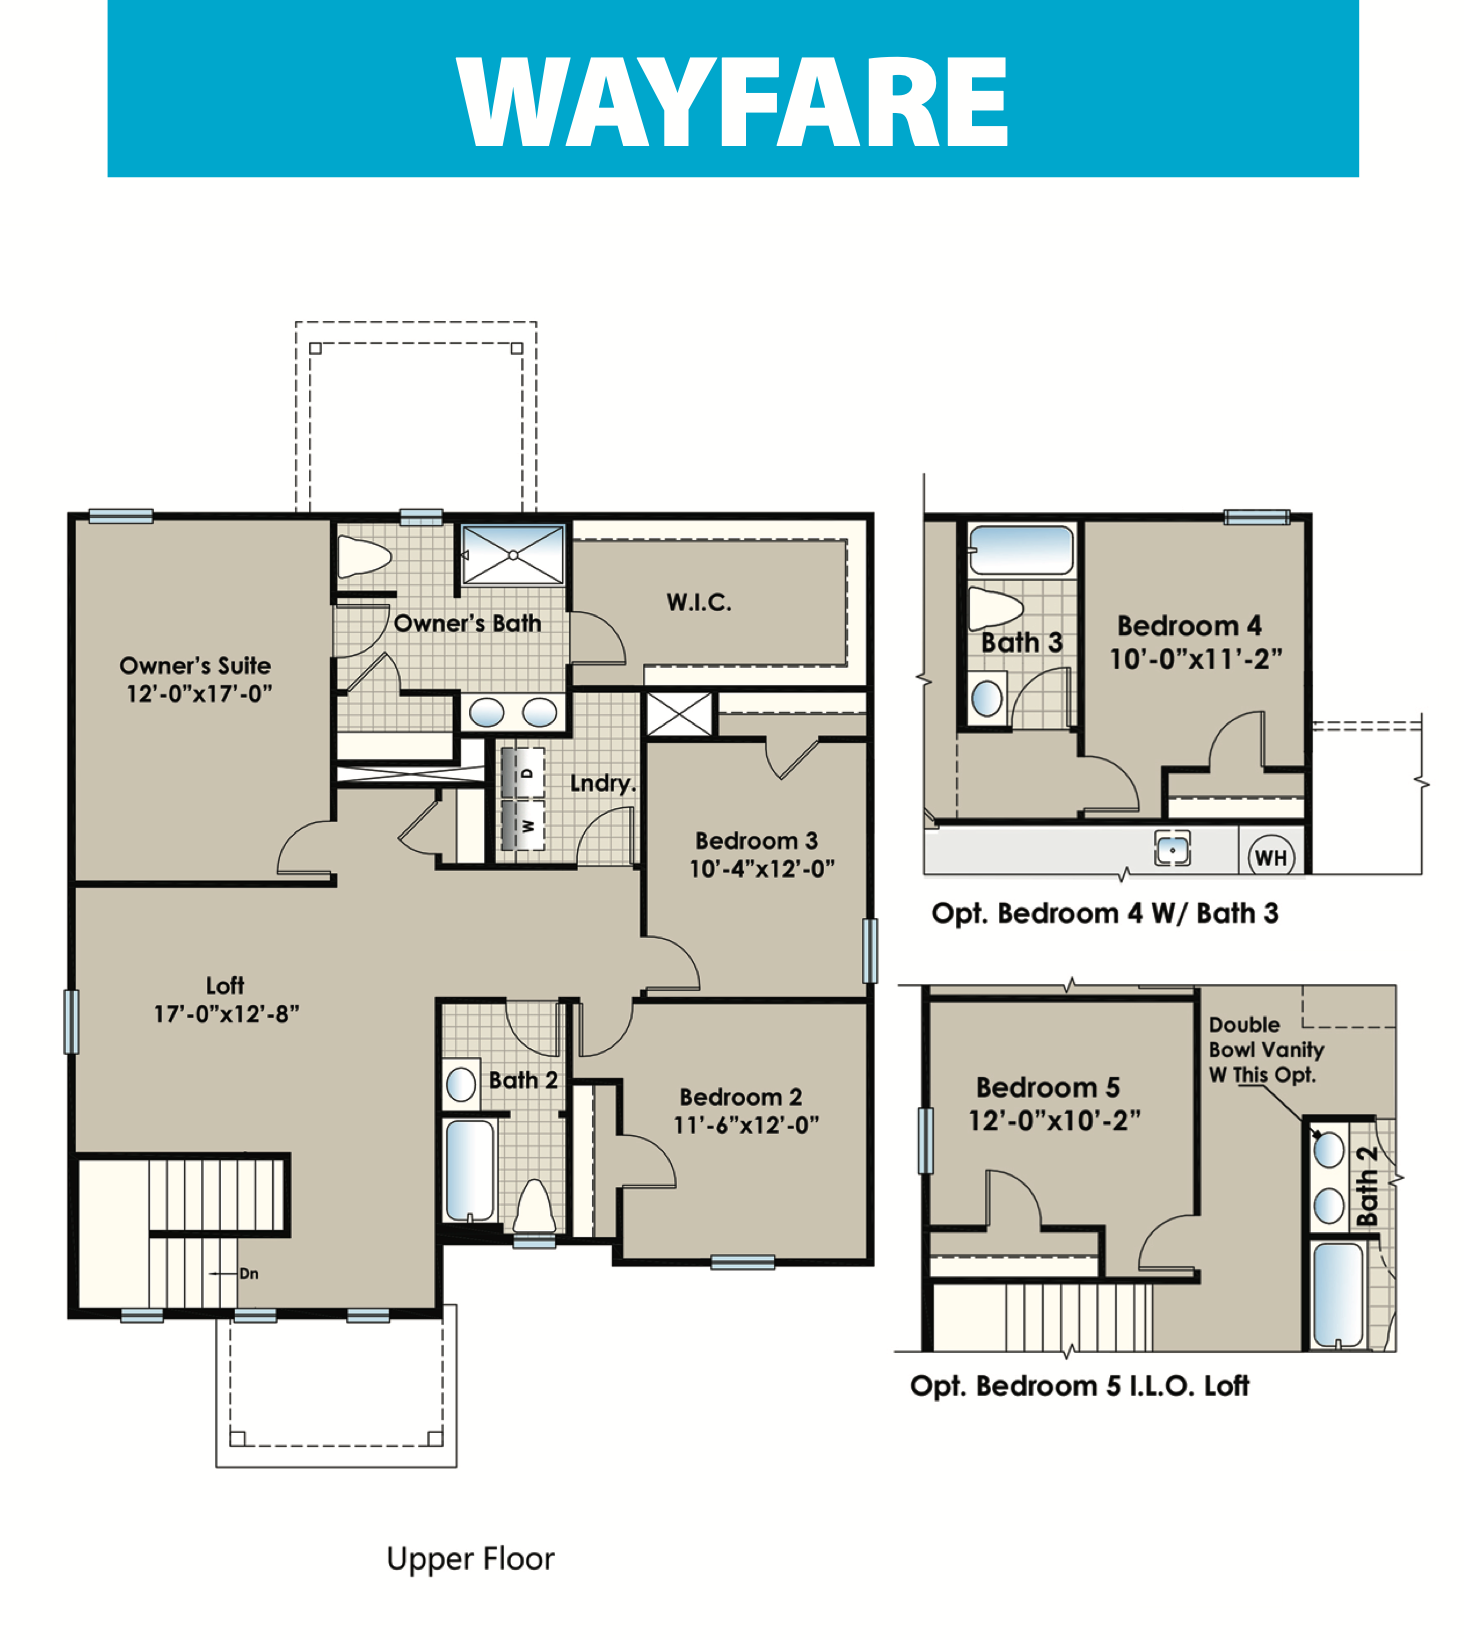 Wayfare floor plan image